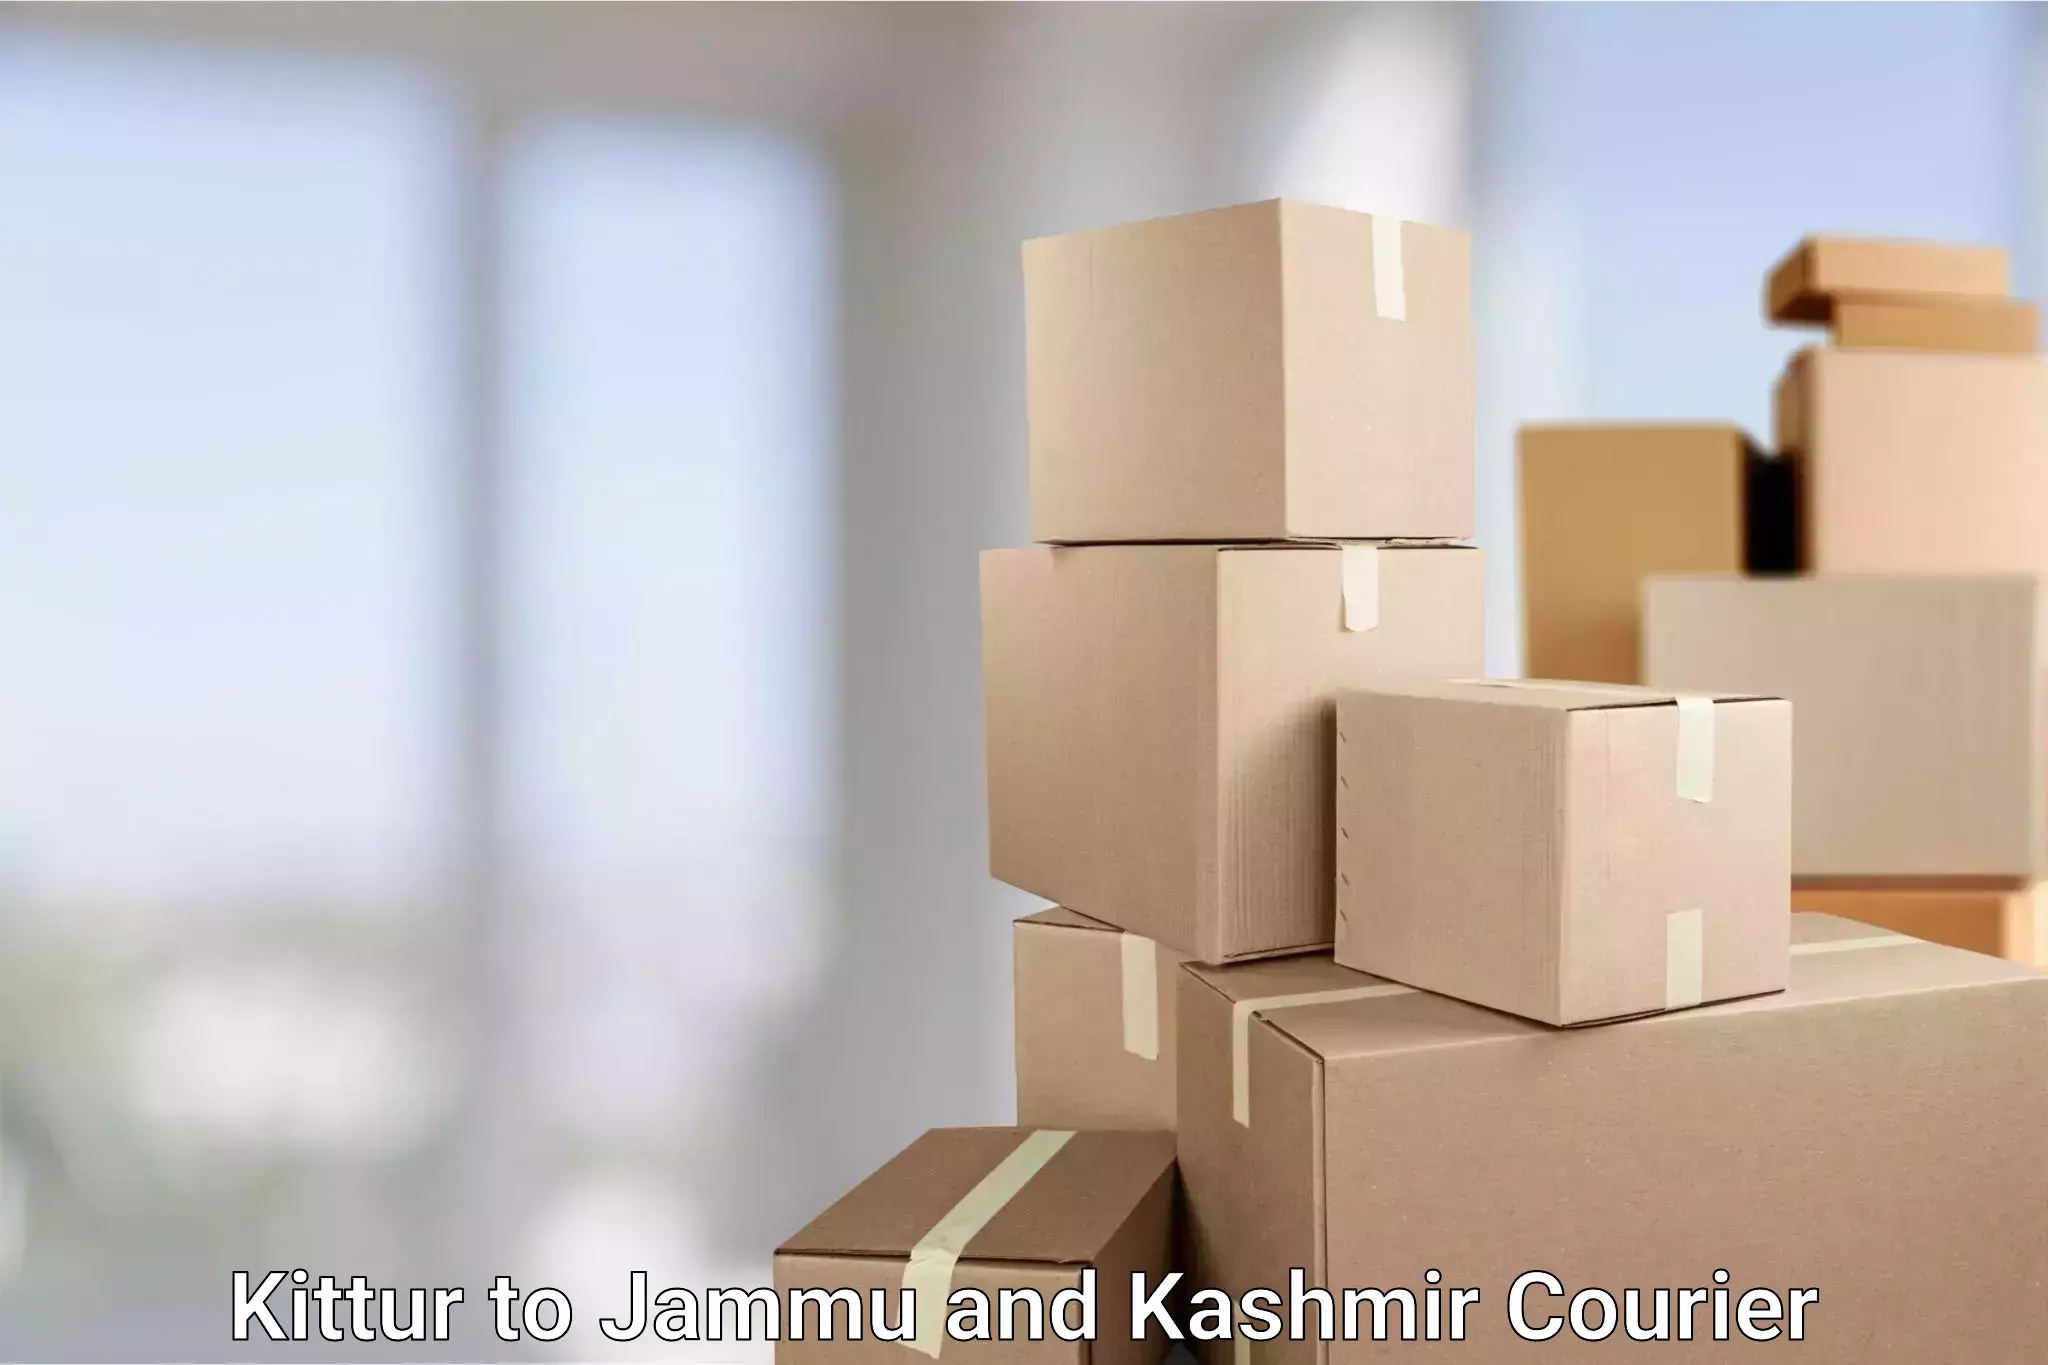 Efficient order fulfillment Kittur to Jammu and Kashmir